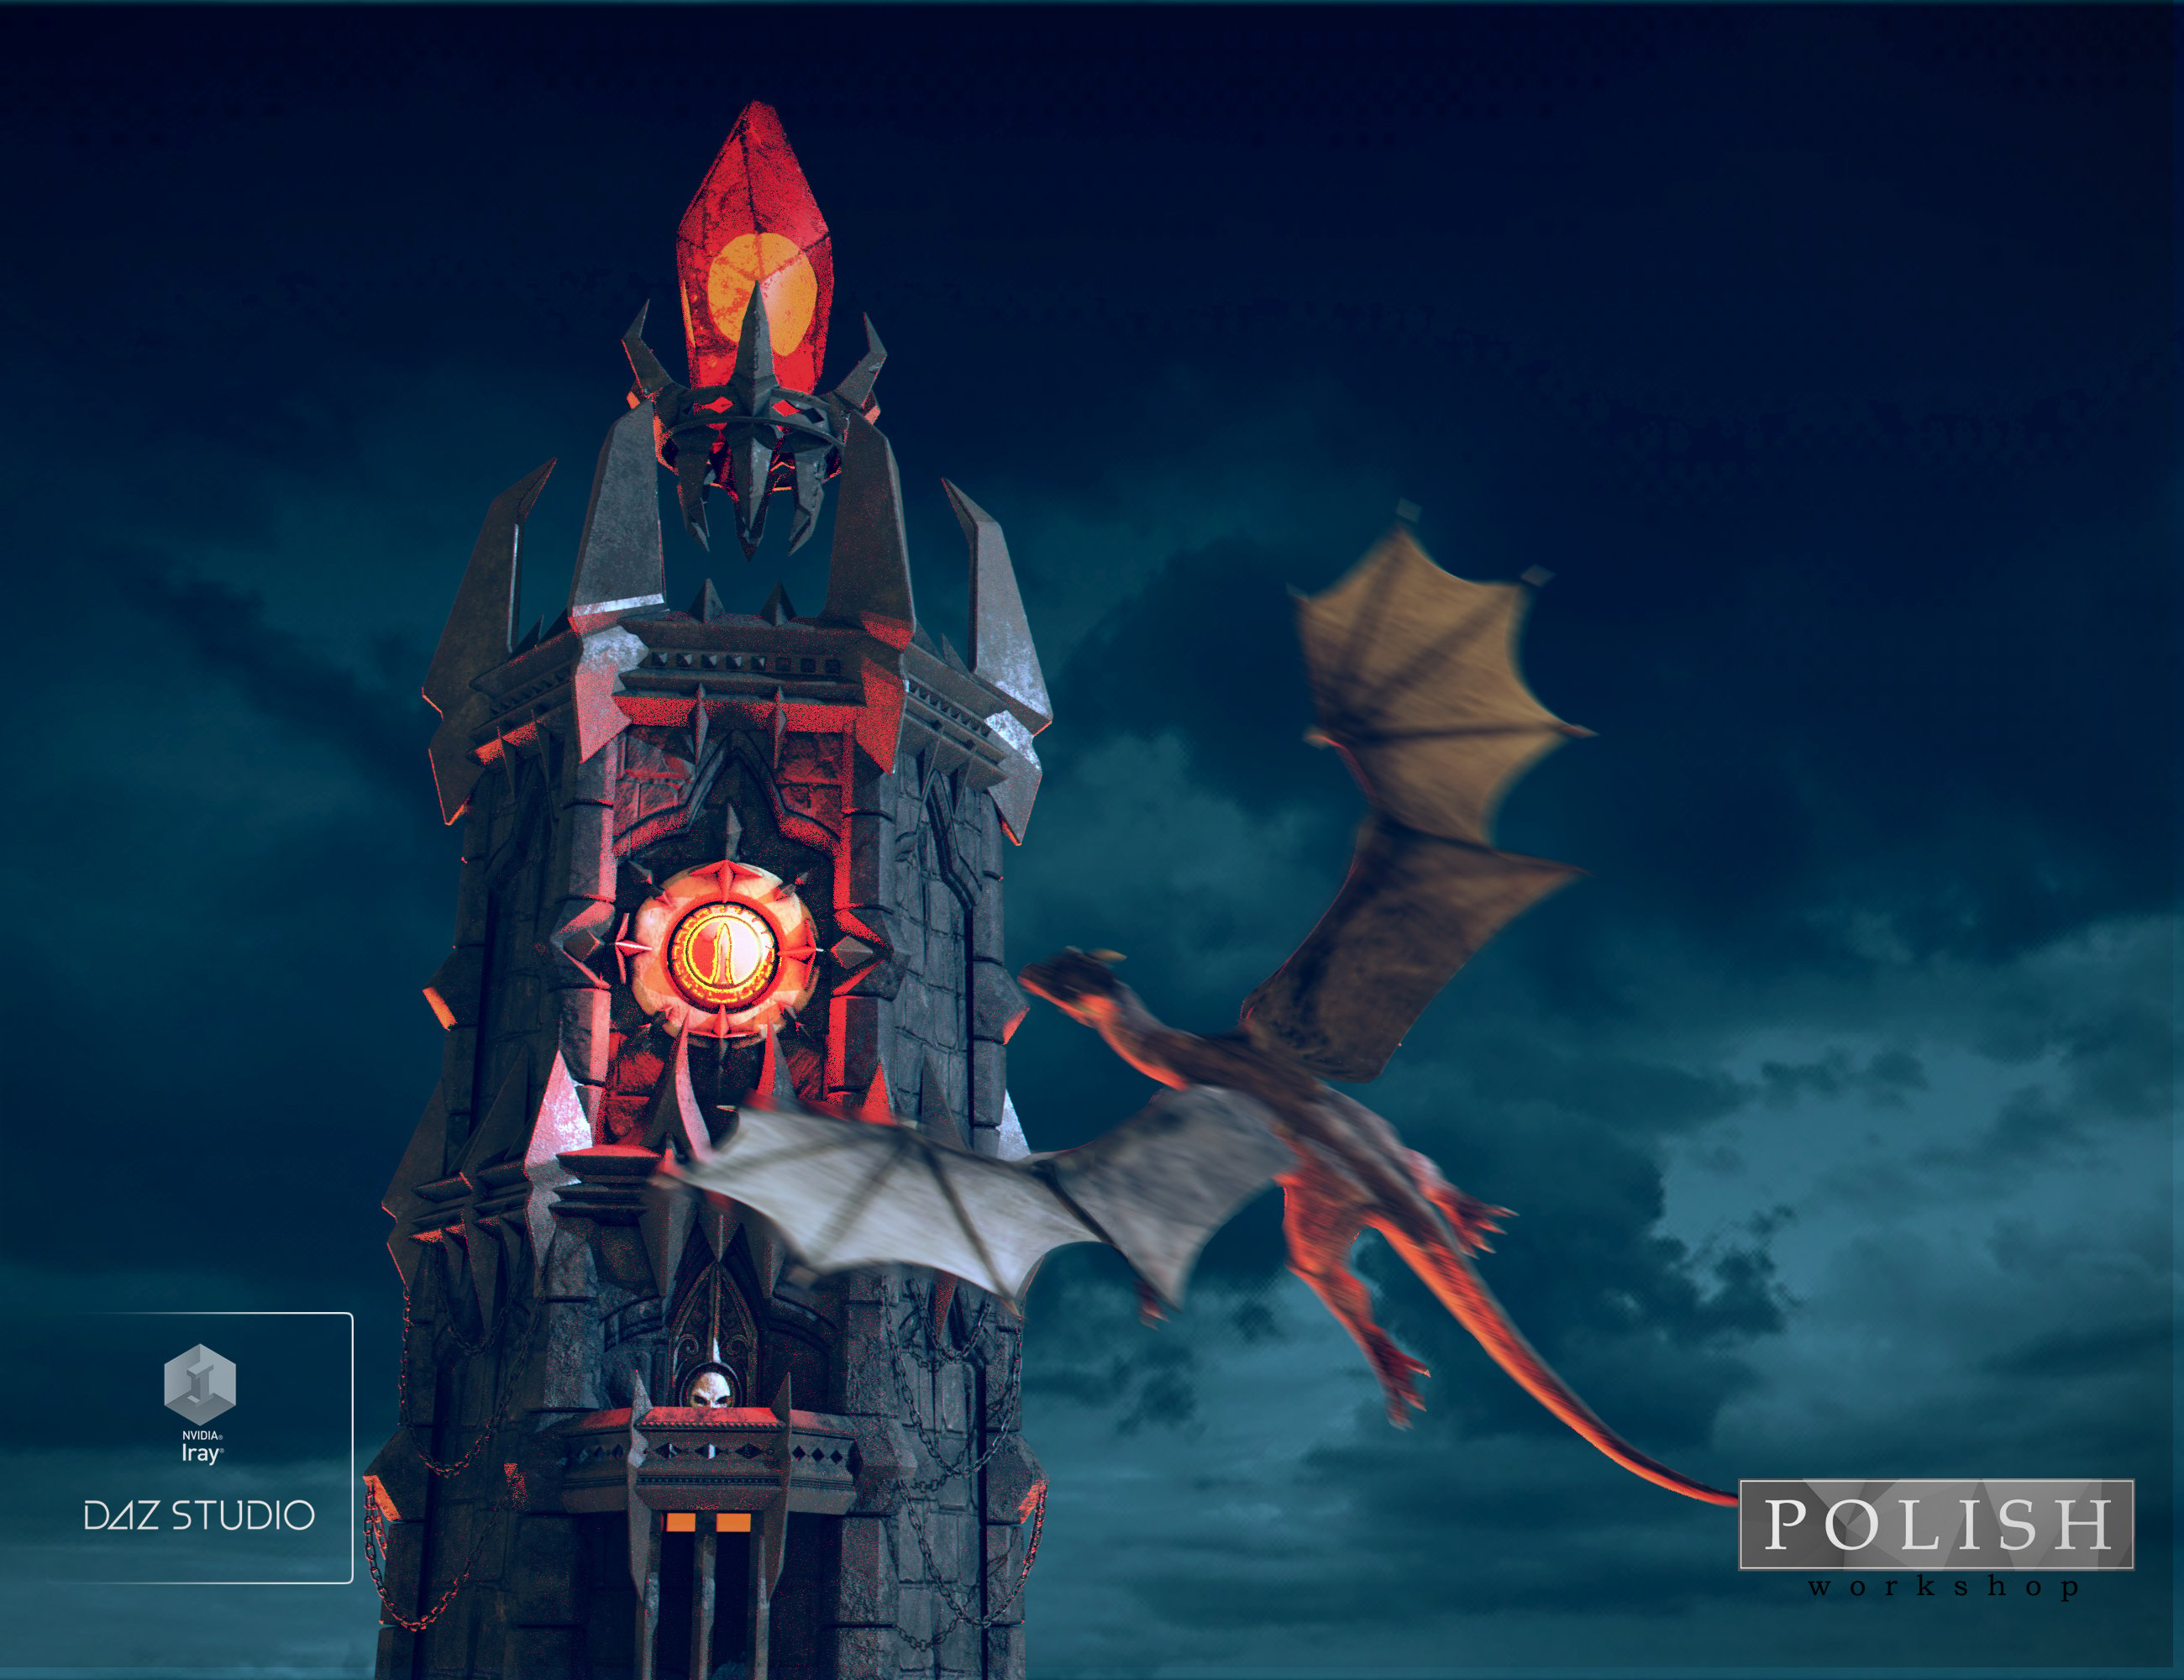 Dark Tower by: Polish, 3D Models by Daz 3D